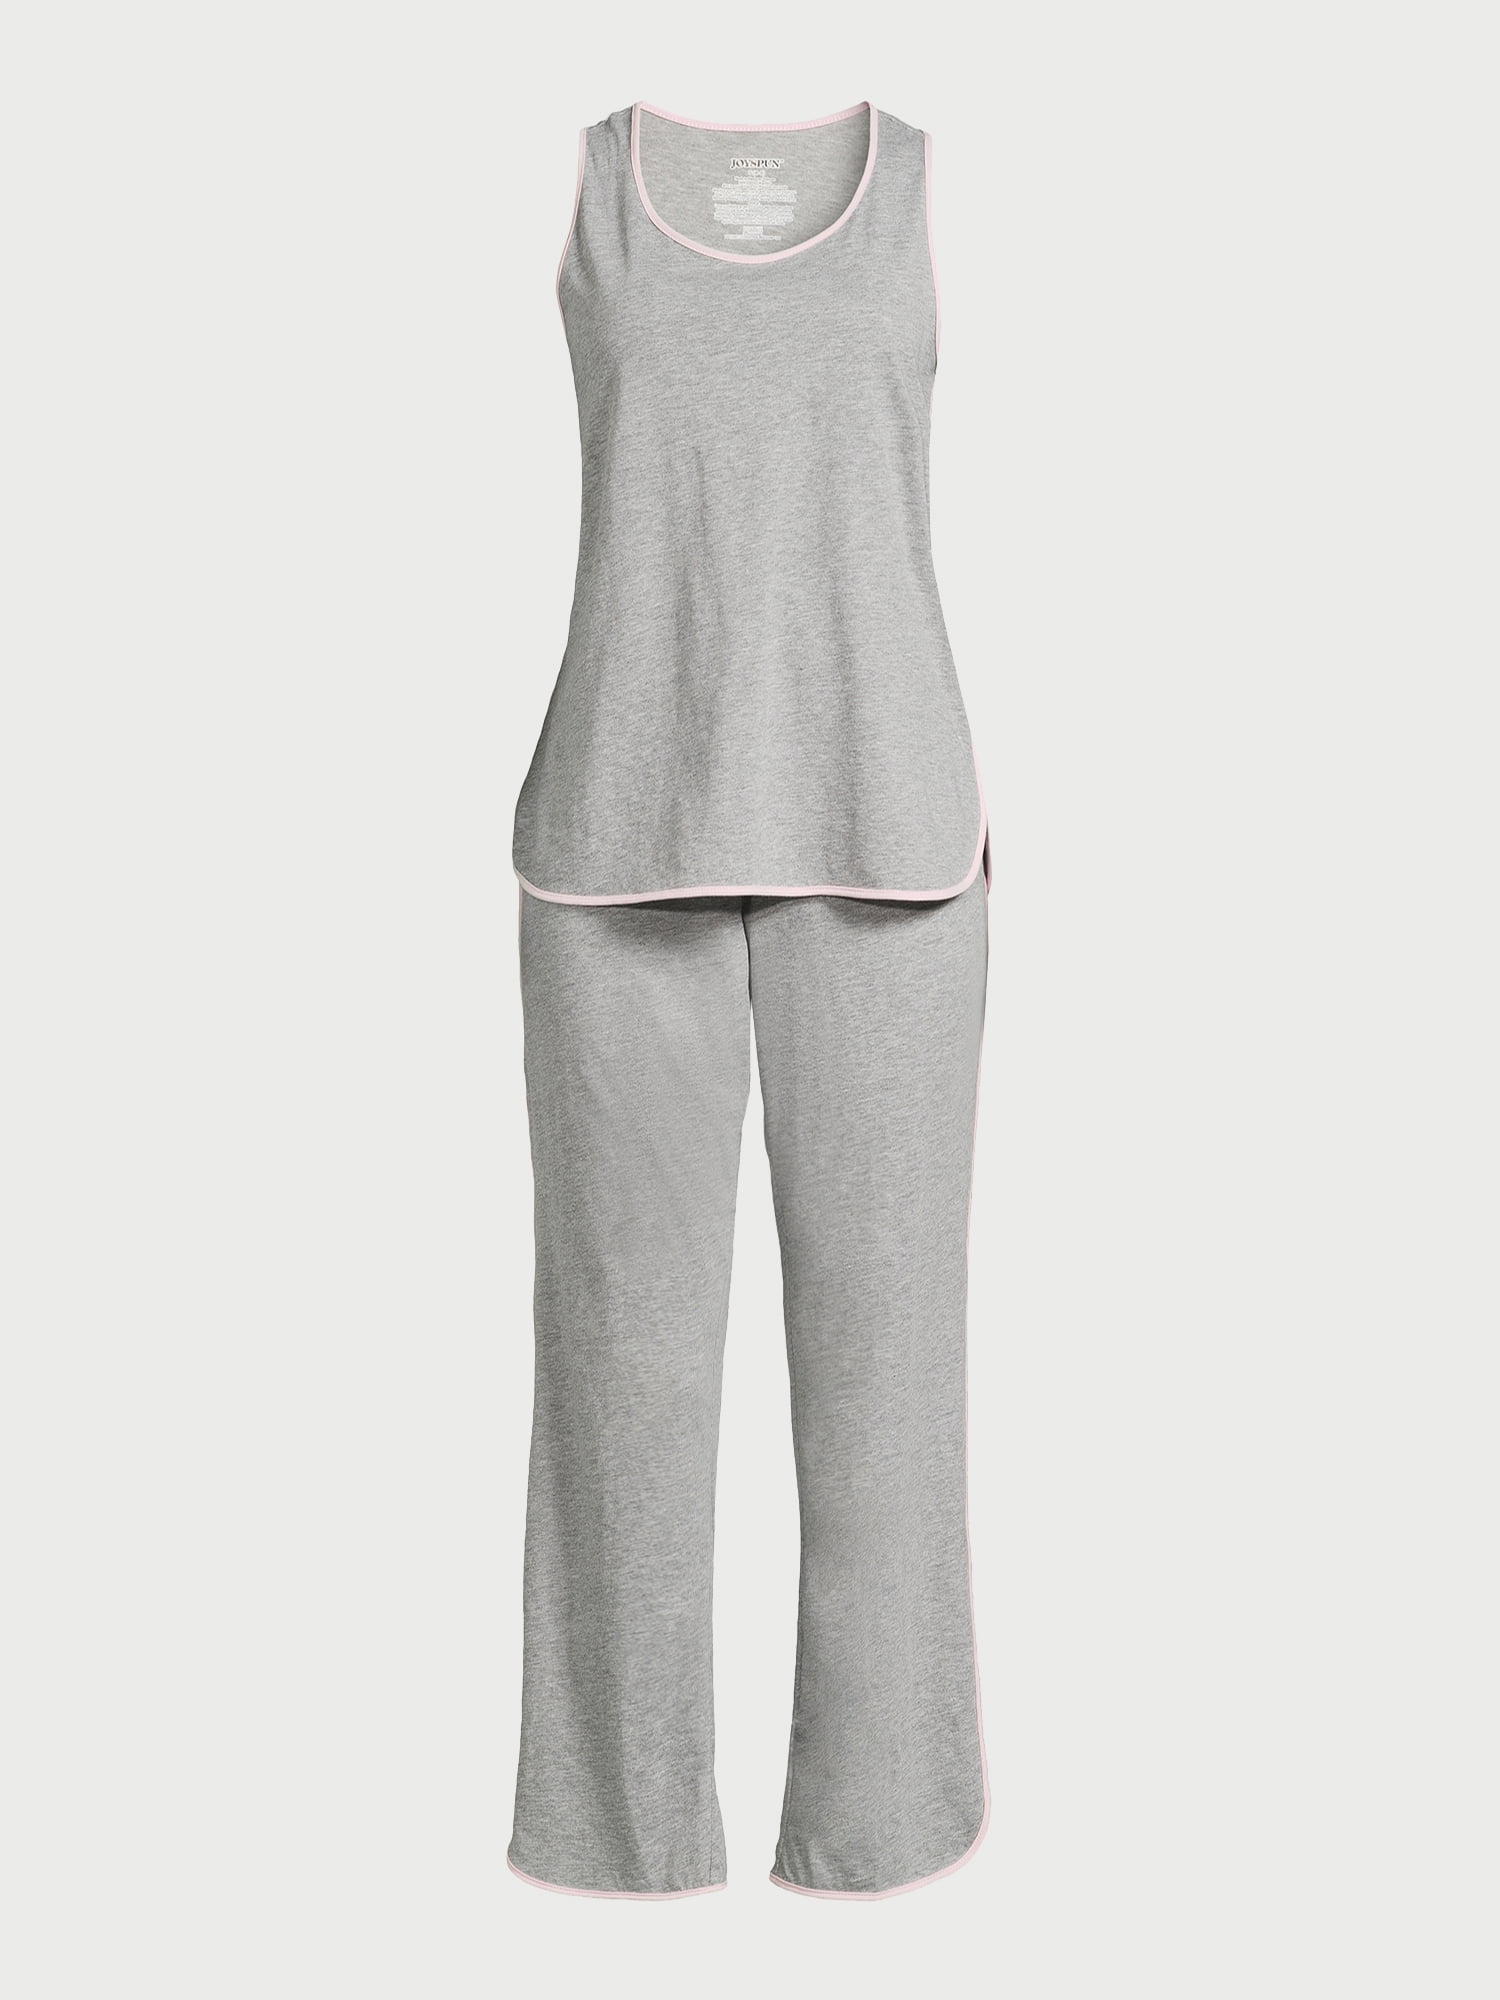 Joyspun Vivid White Tank Top & Shorts Pyjama Set - Bras